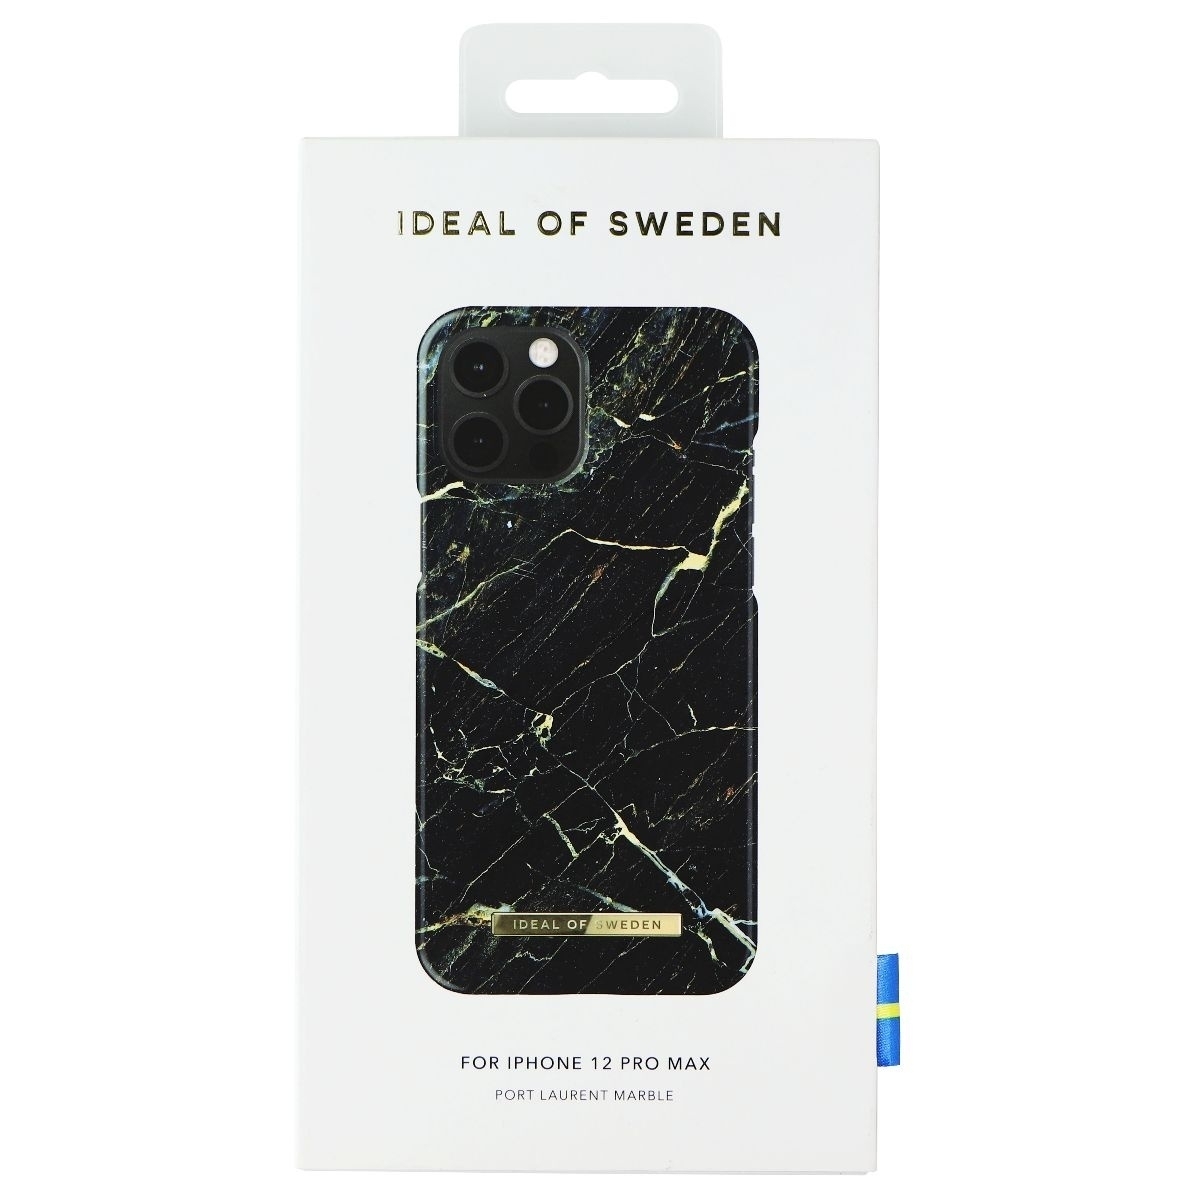 IDeal Of Sweden Hard Case For Apple IPhone 12 Pro Max - Port Laurent Marble